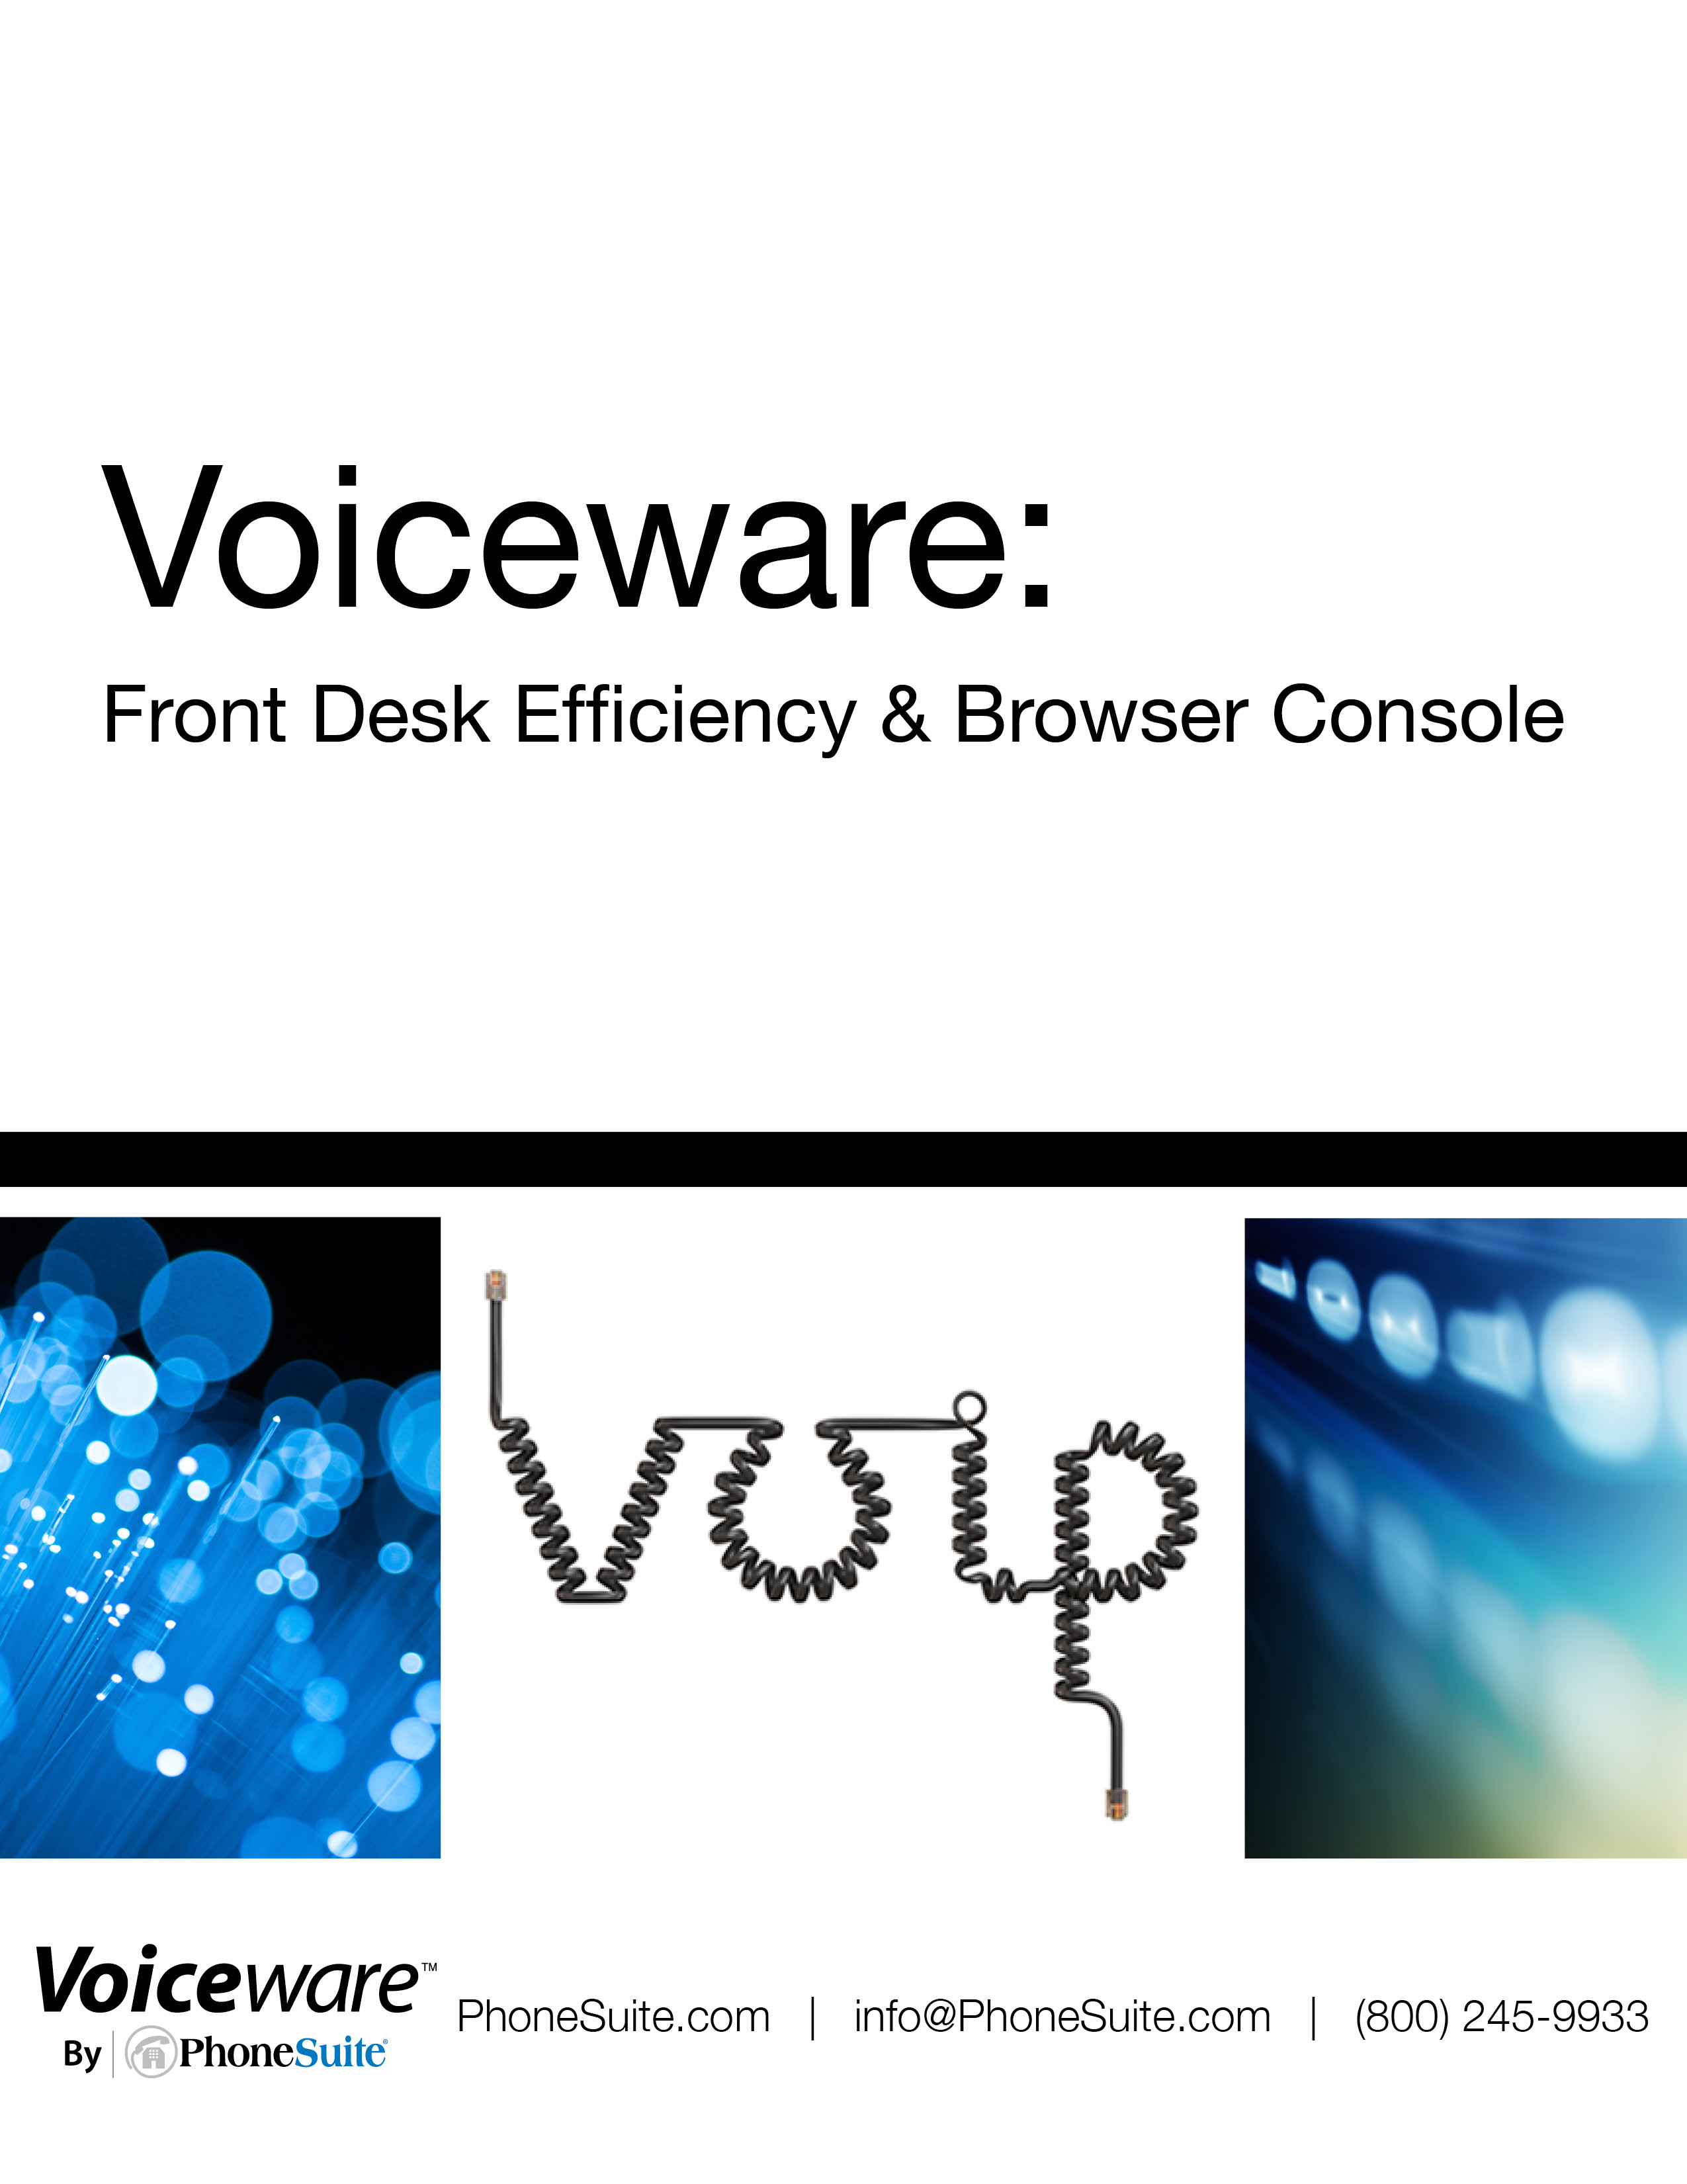 Voiceware Hotel Telephone VoIP Technology